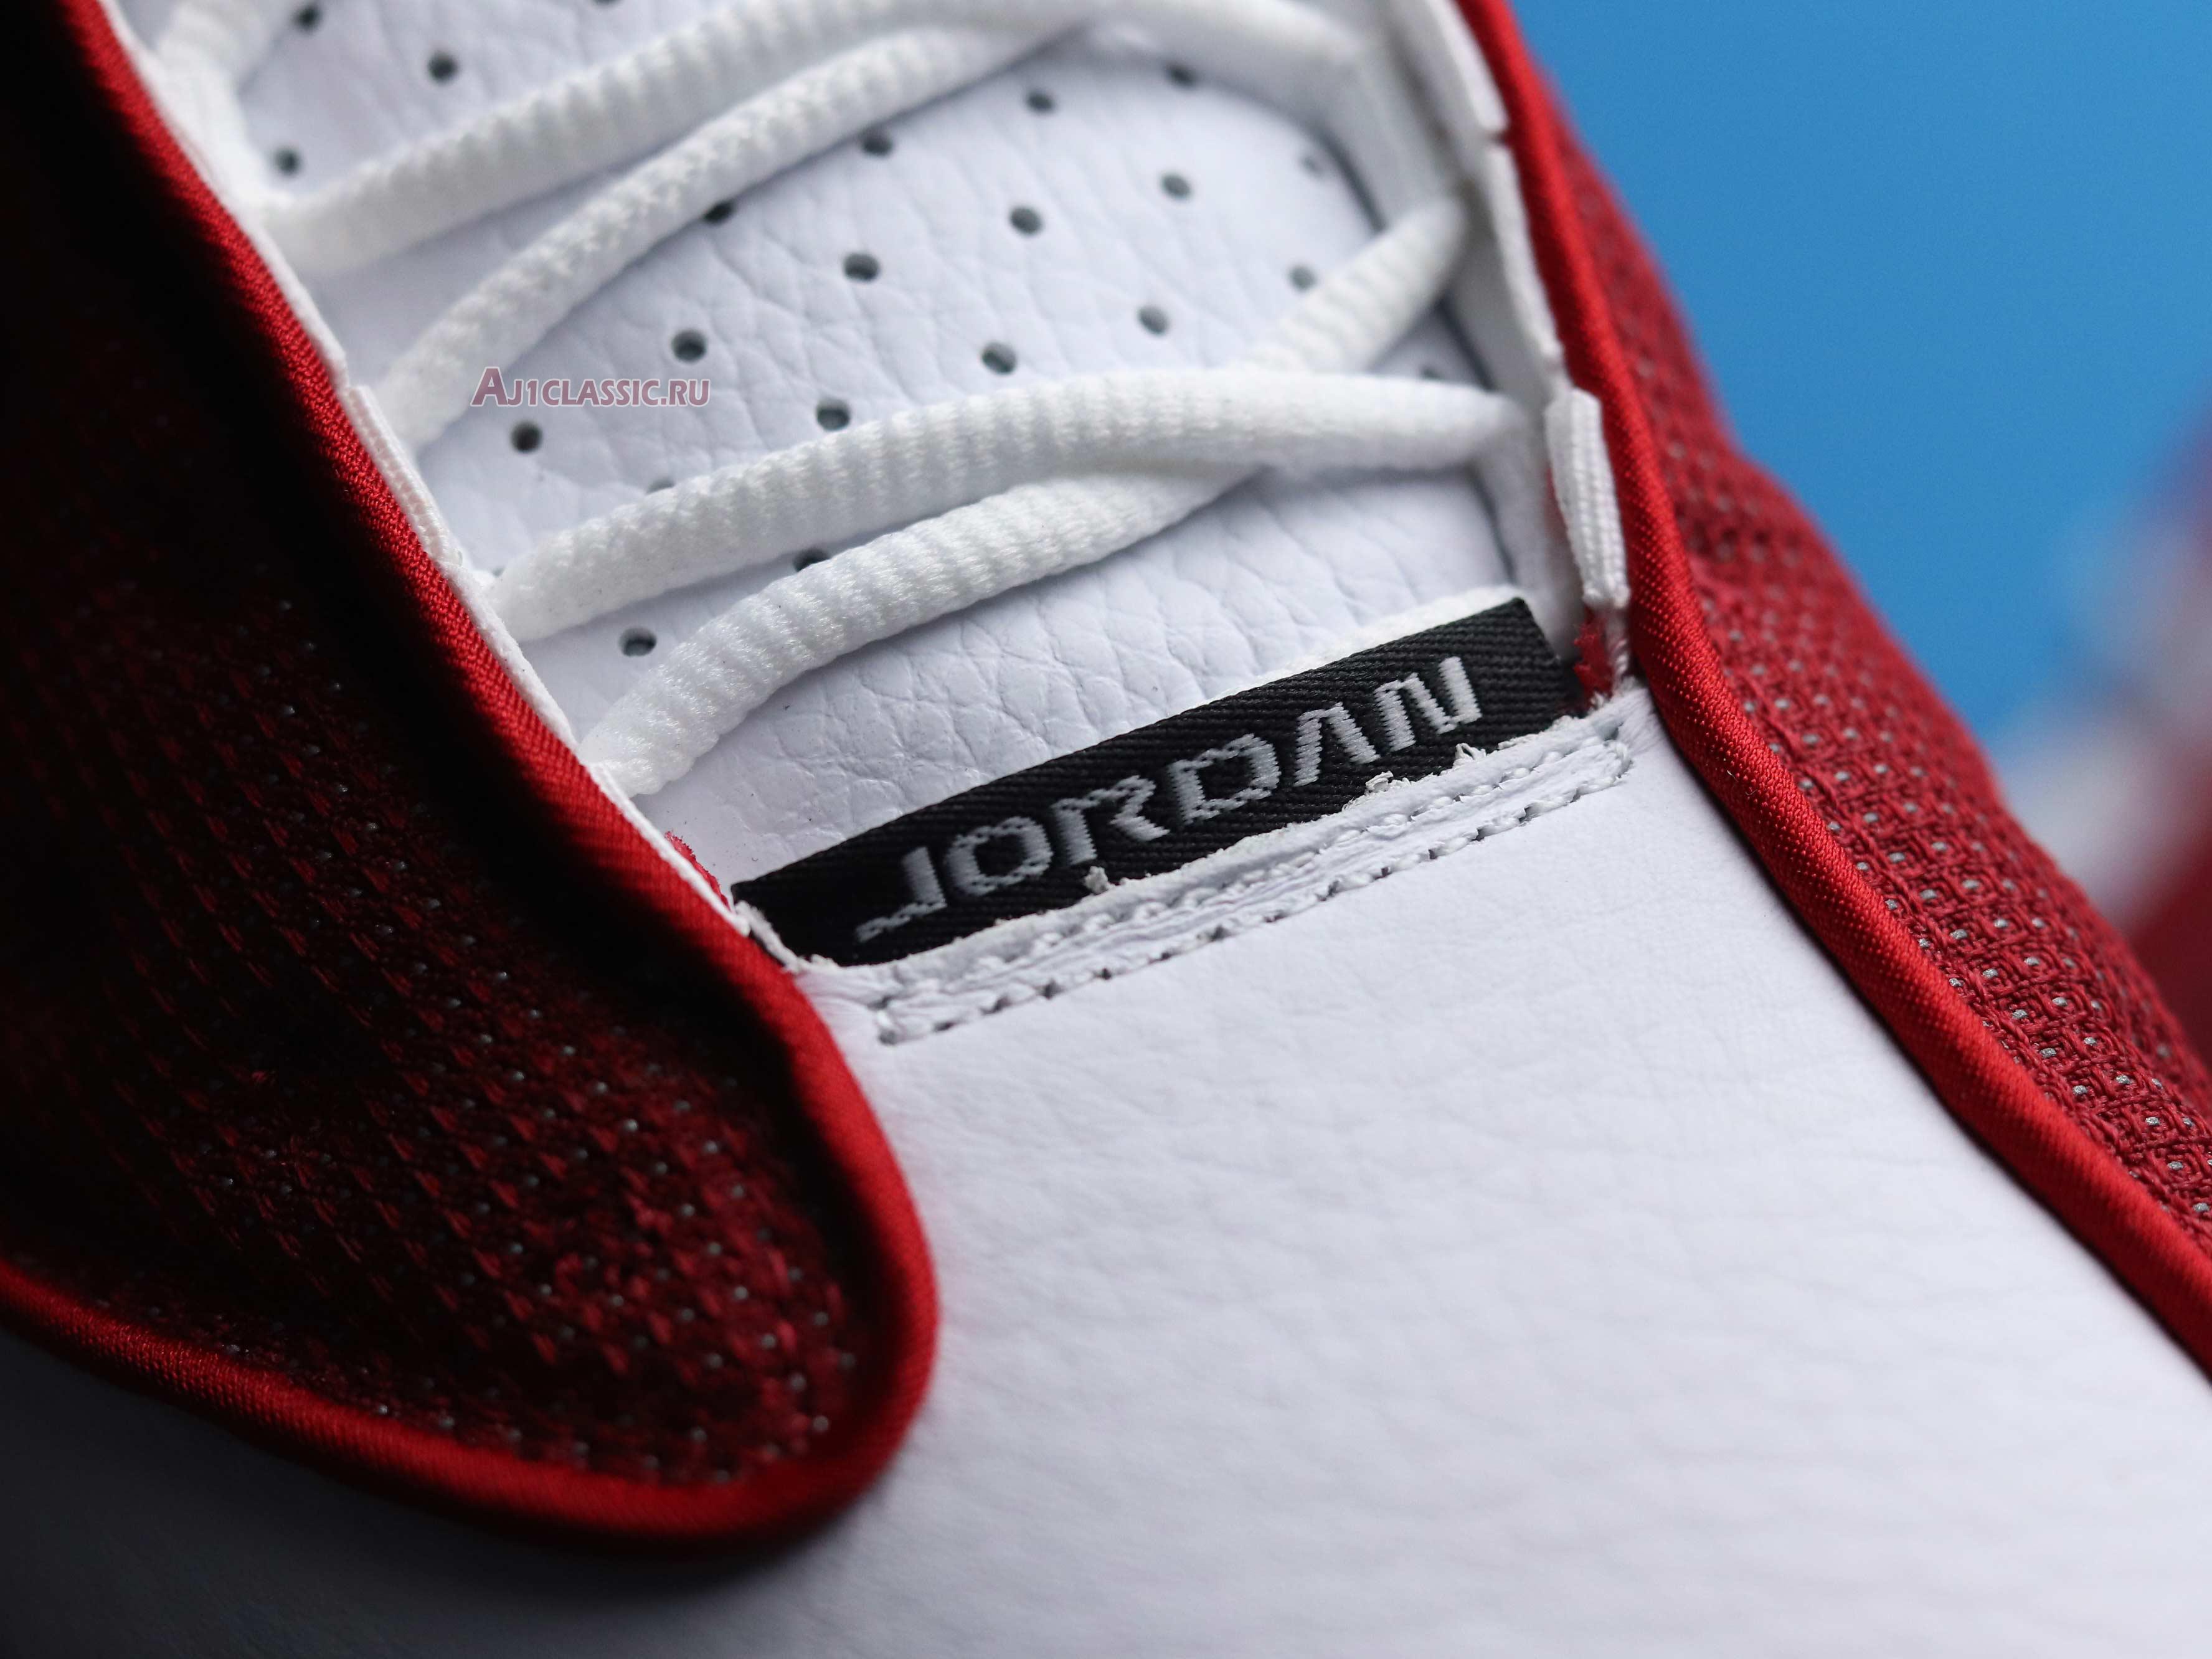 Air Jordan 13 Retro "Gym Red" 414571-600